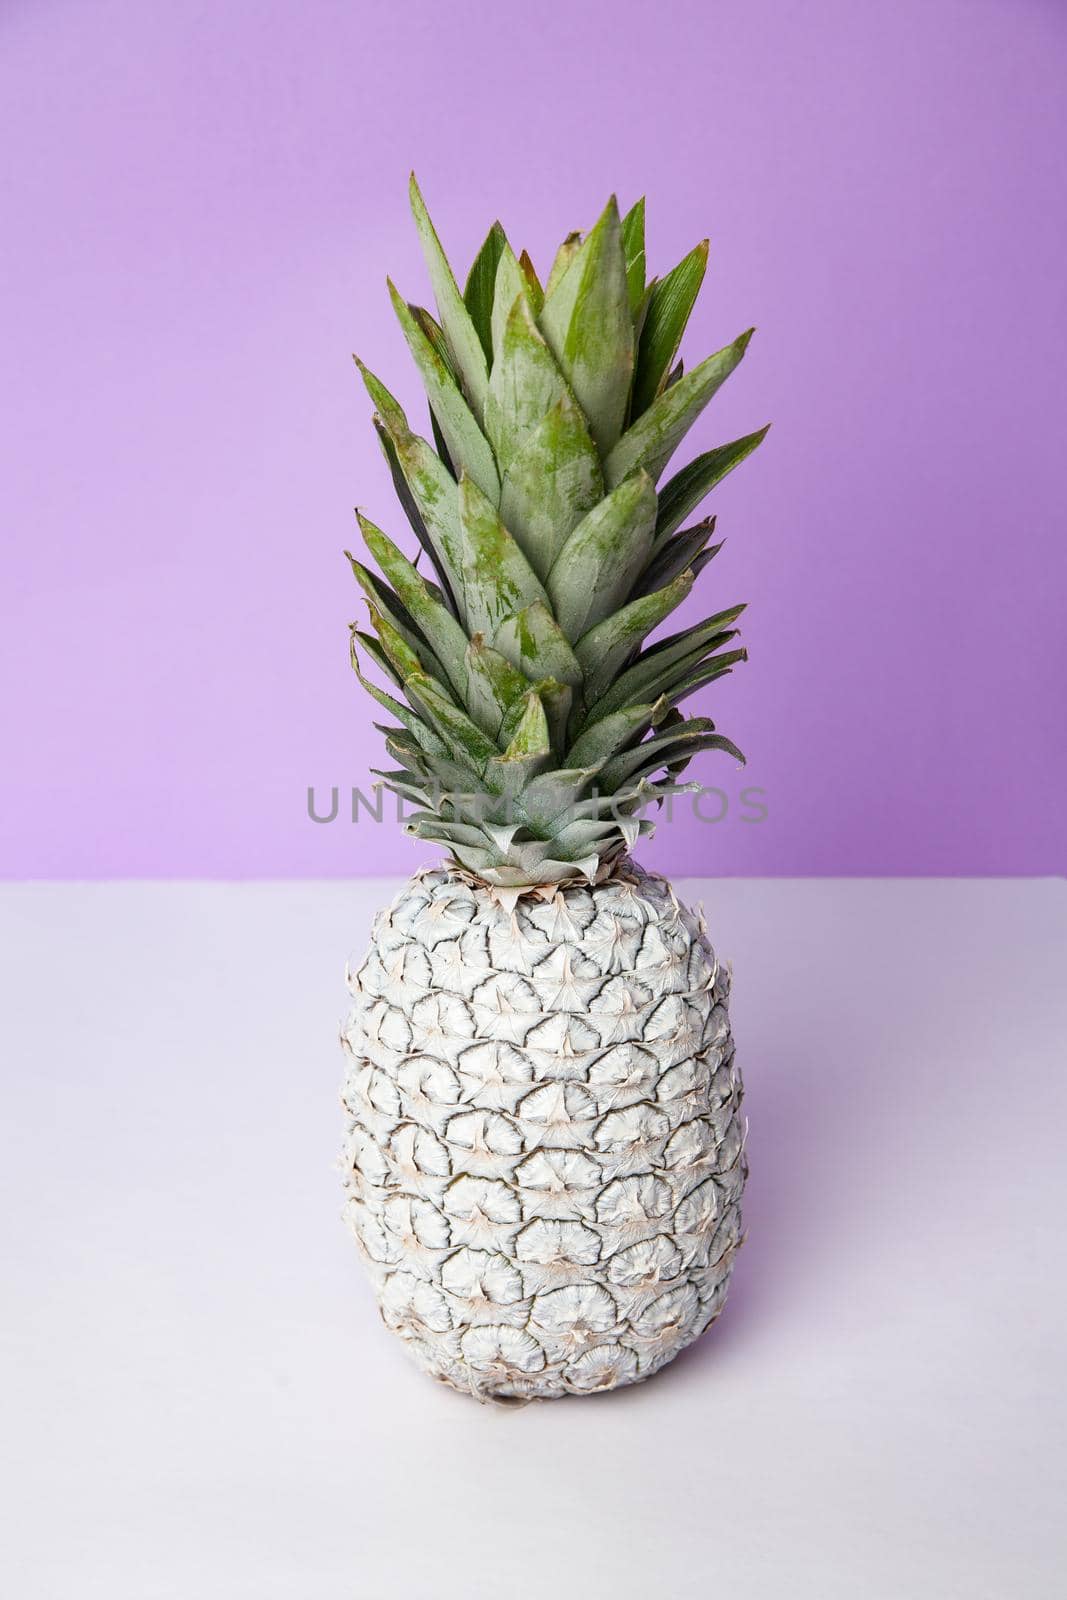 White pineapple on table in studio on violet background by Julenochek